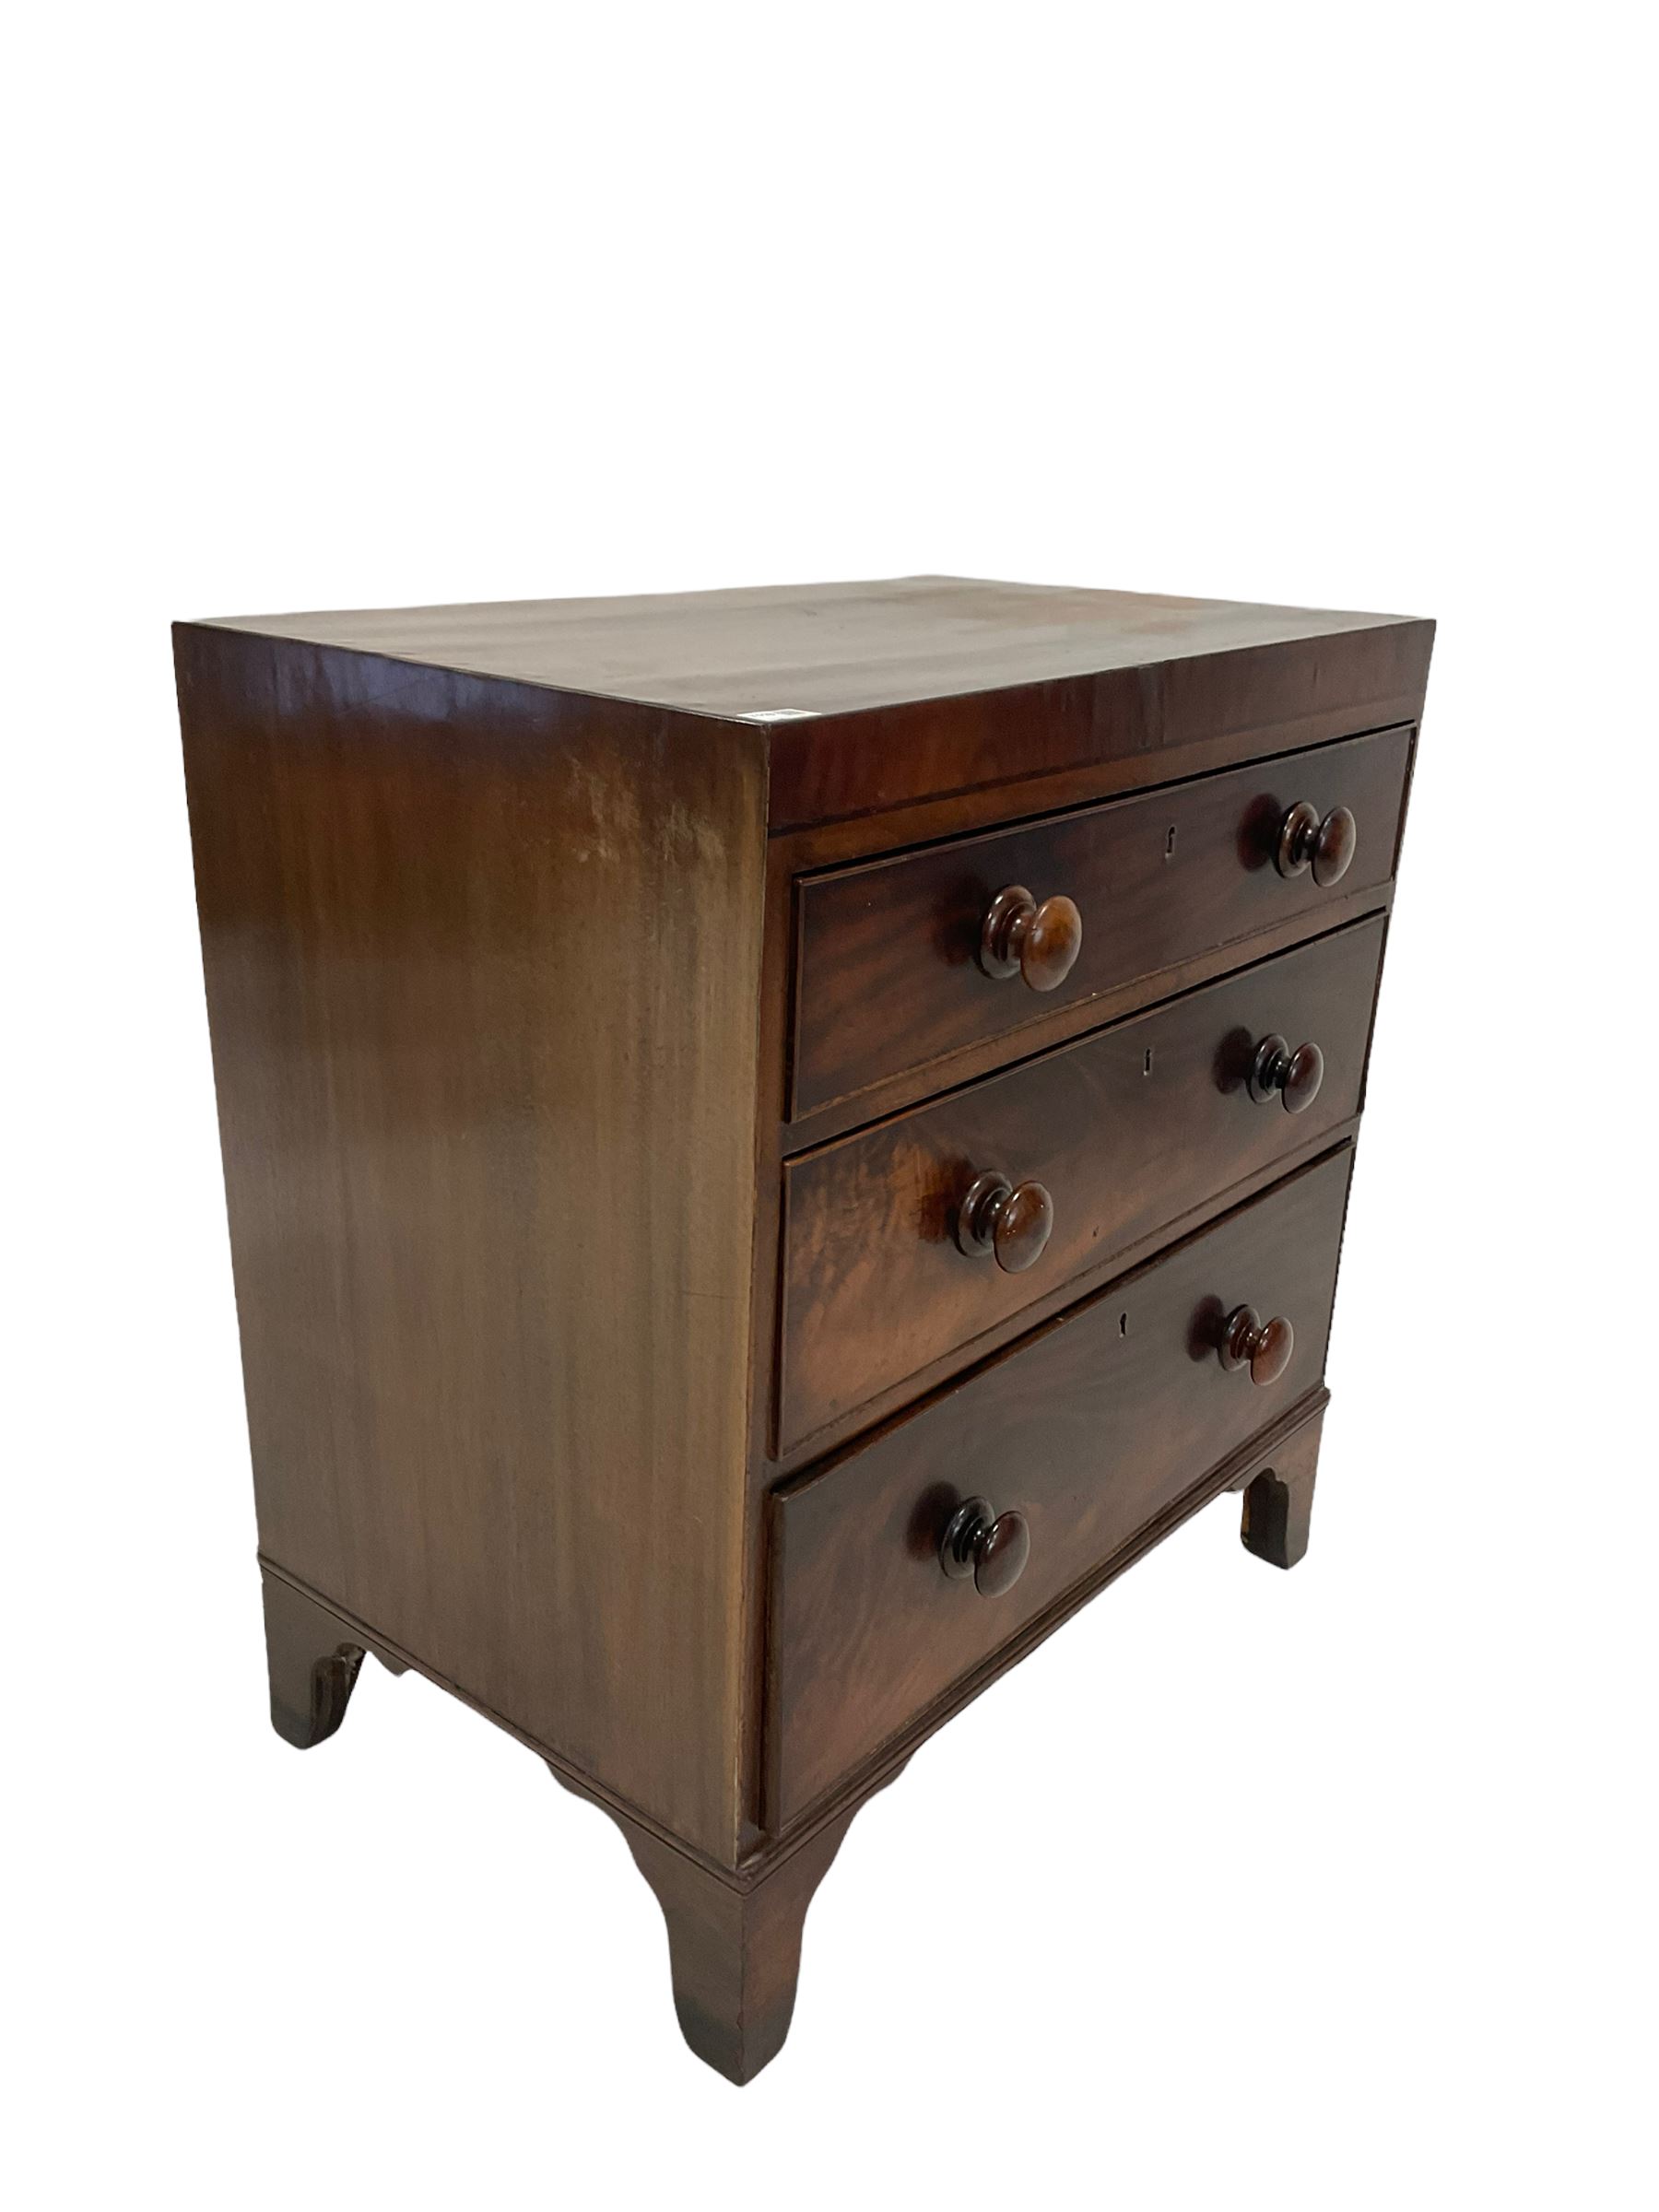 19th century mahogany chest - Image 2 of 4